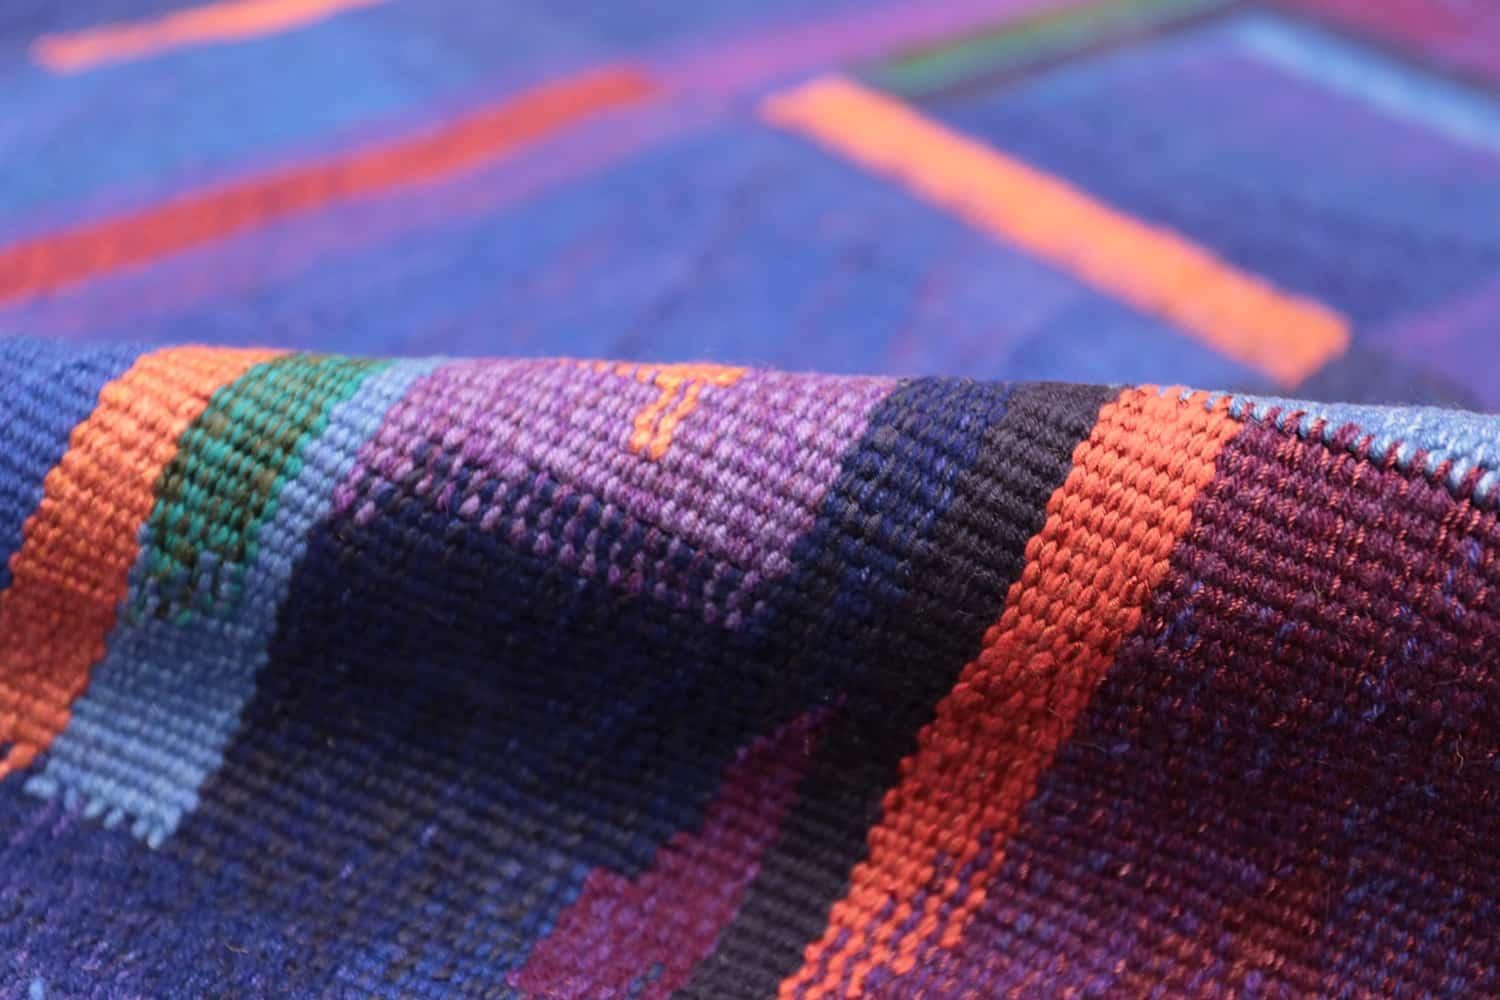 Hand-Woven Vintage Scandinavian Tapestry Rug by Eevahenna Aalto. 3' 5